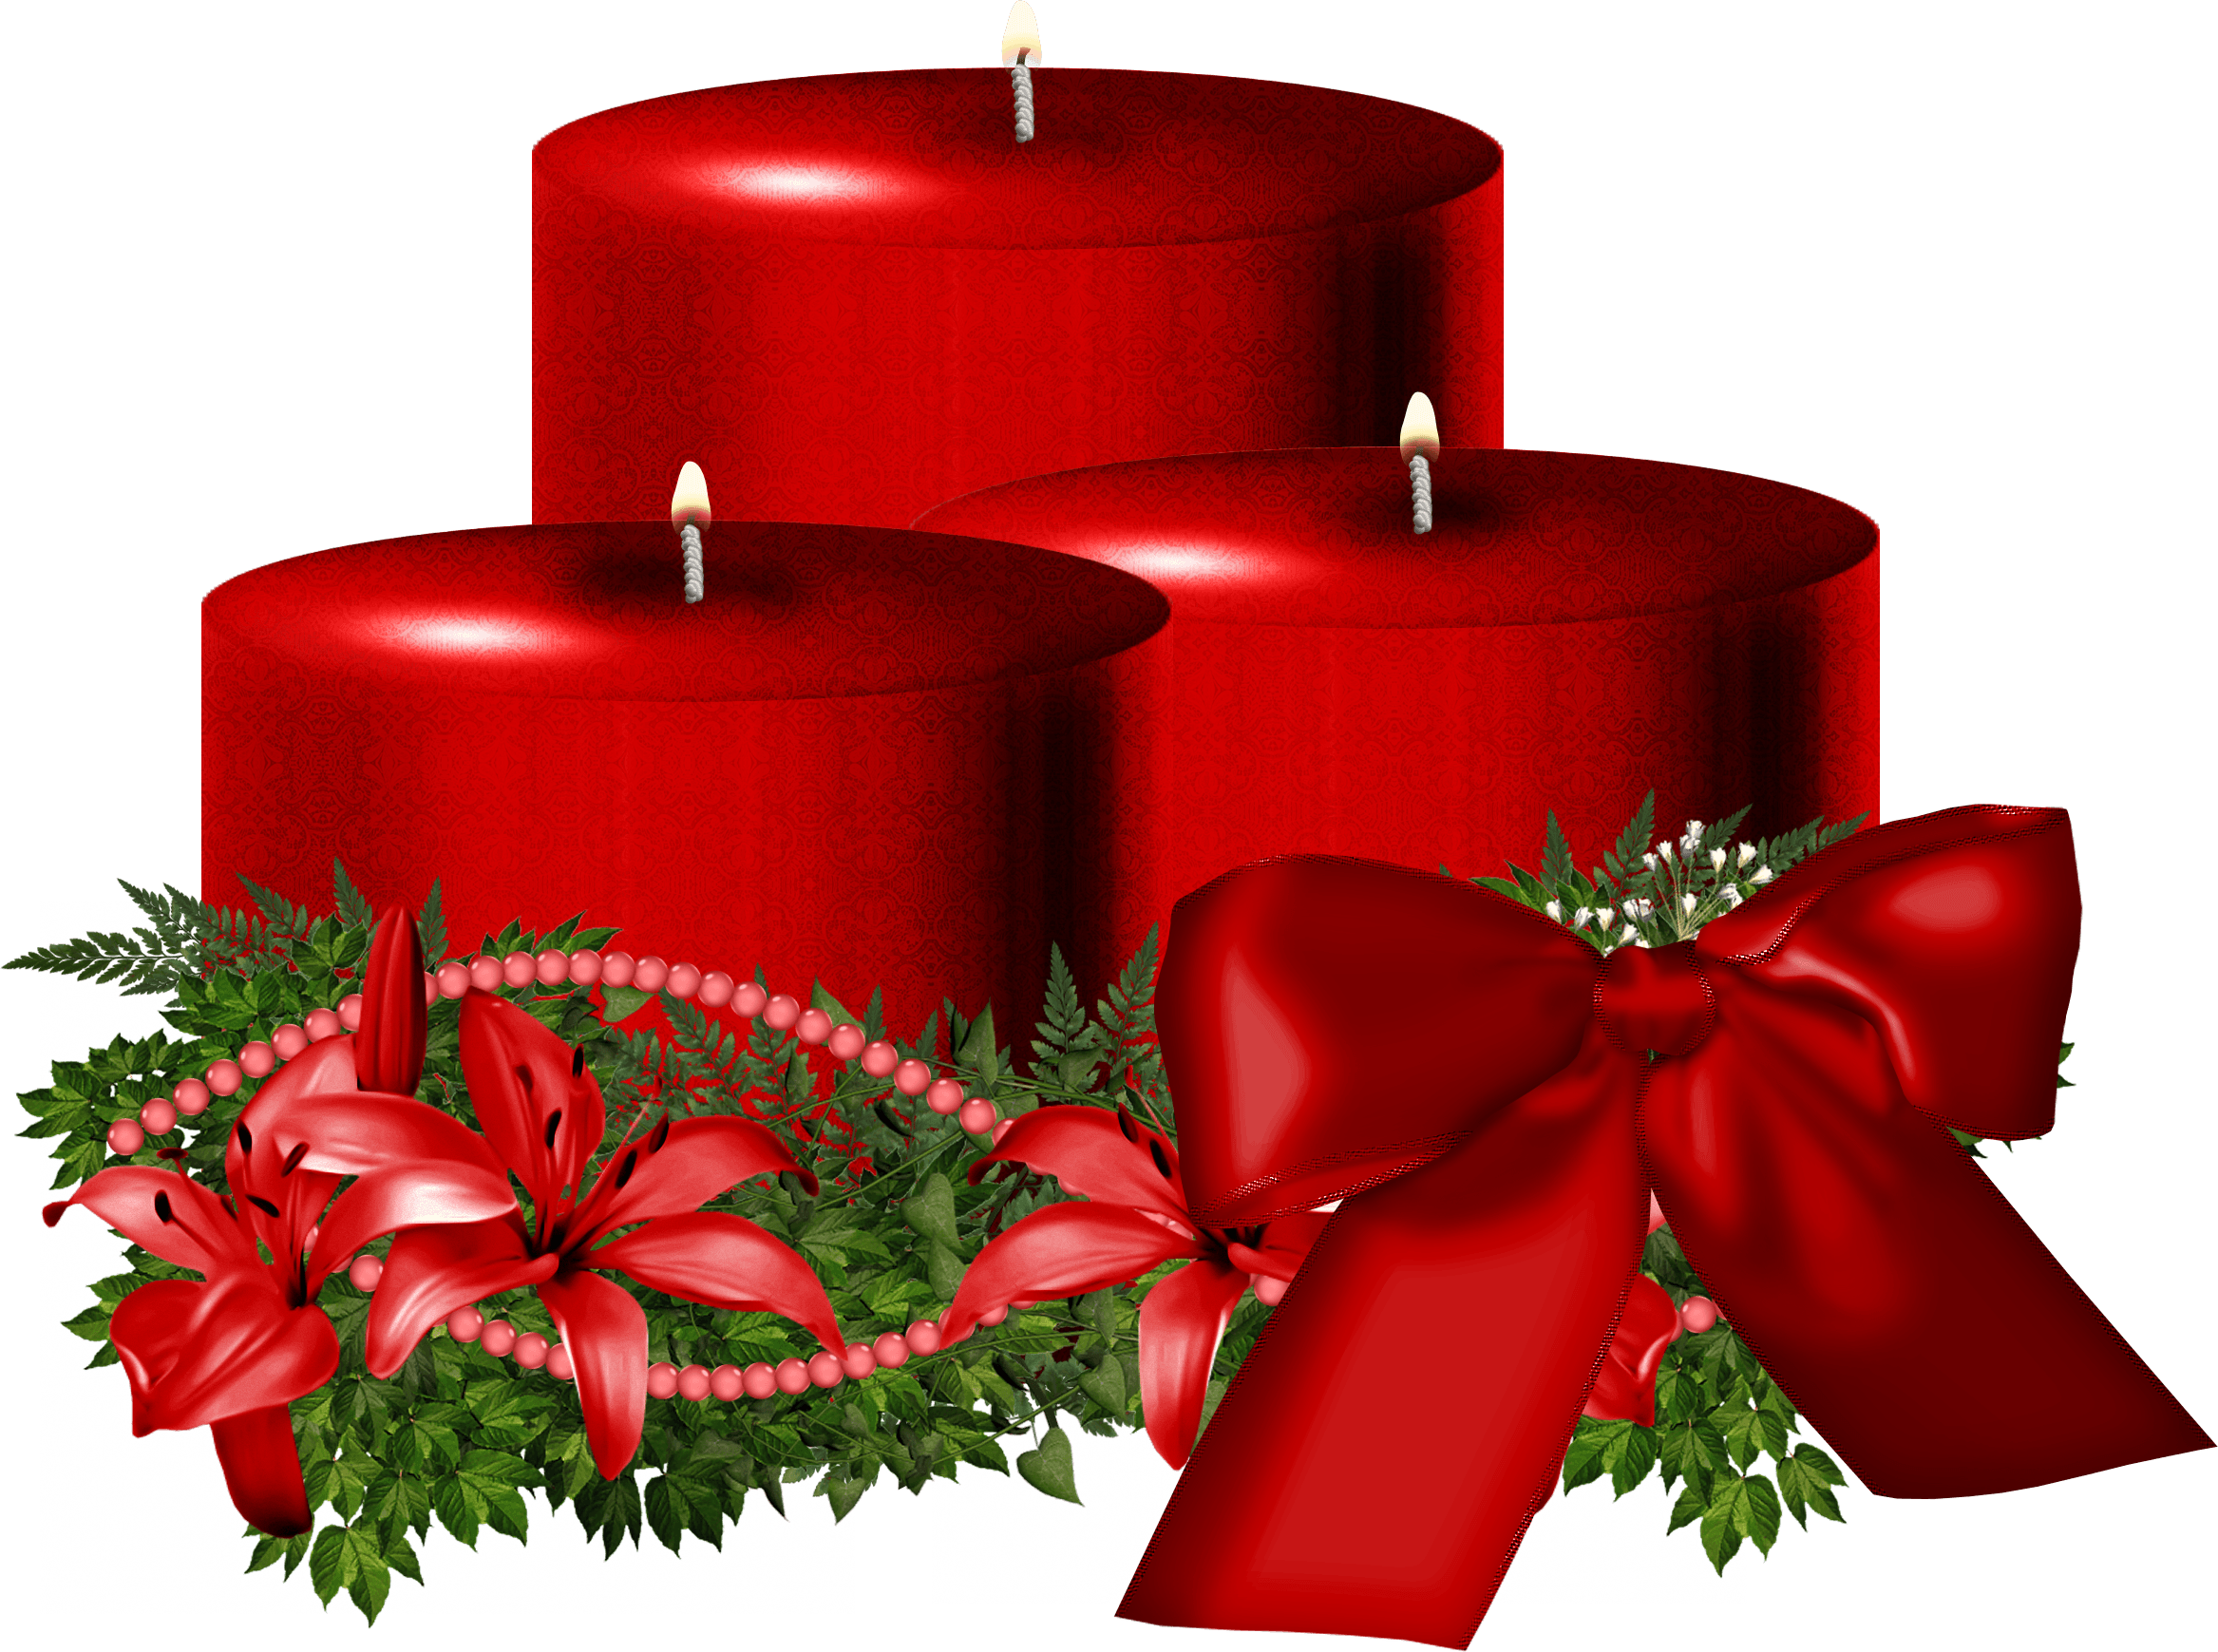 Christmas Candle Png Image PNG Image